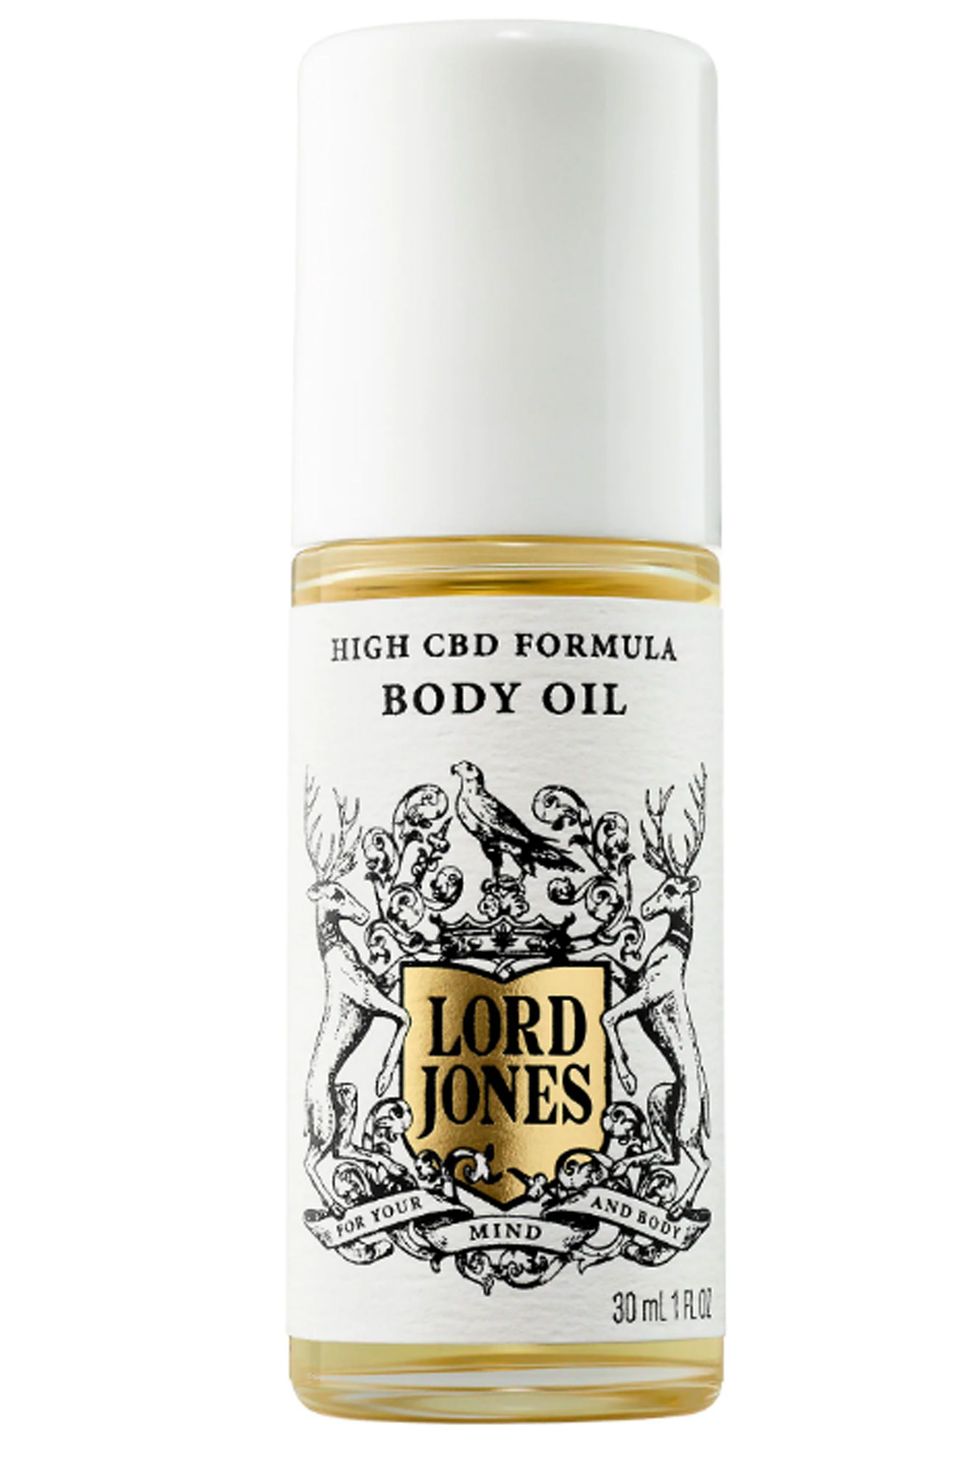 High CBD Formula Body Oil